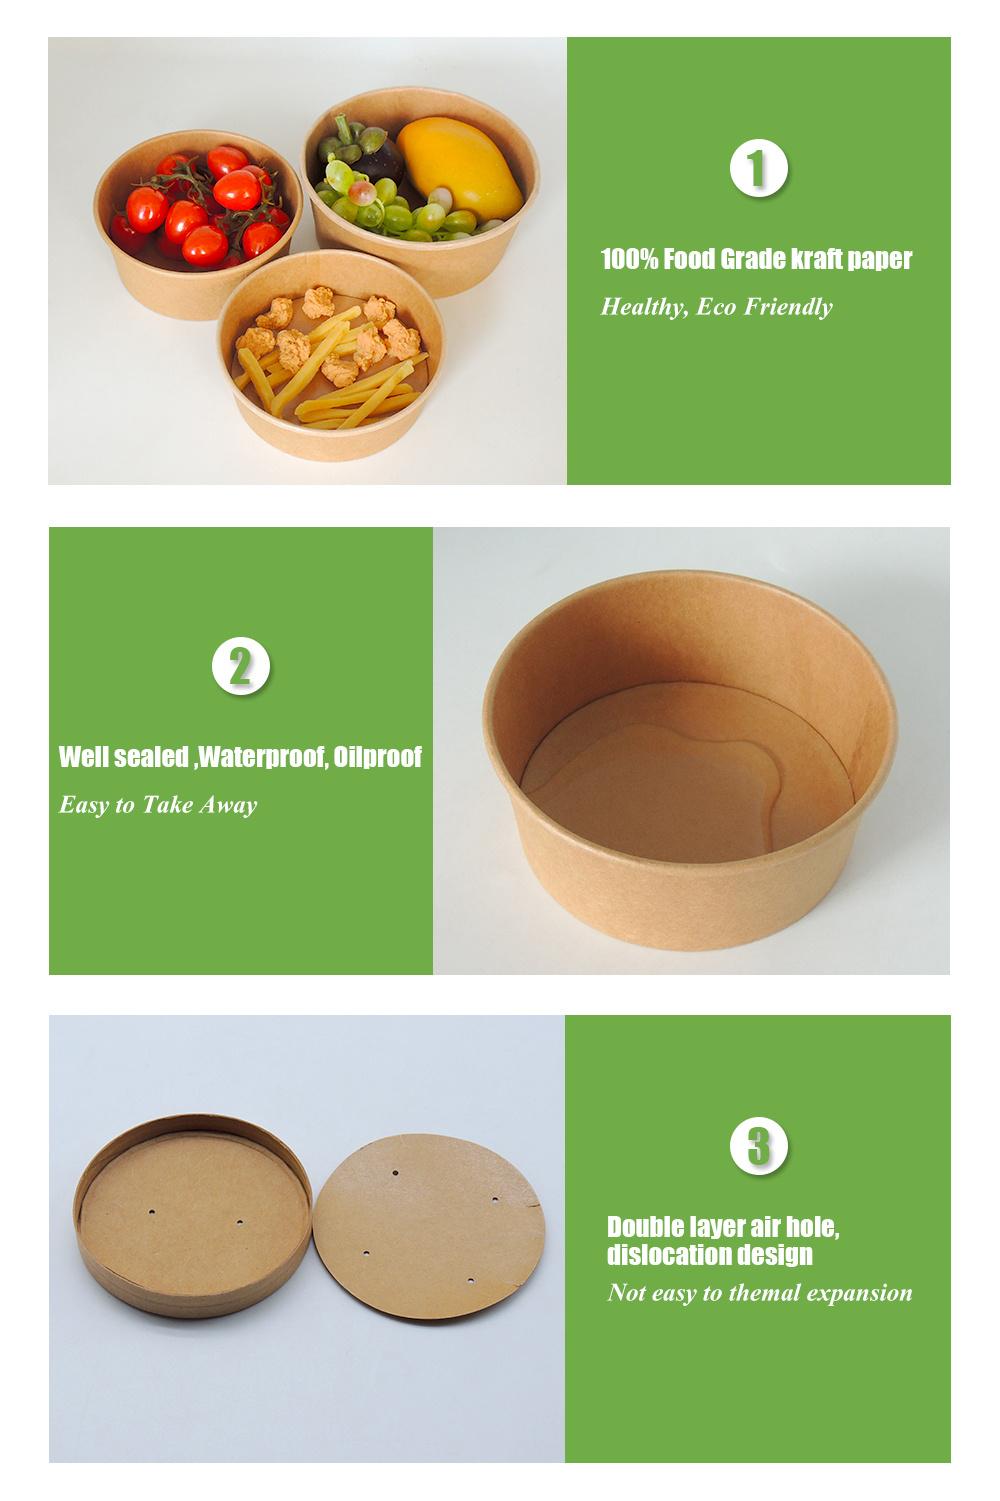 Disposable 500ml-1300ml Kraft Take Away Food Box Paper Food Packaging Salad Bowls with Lid